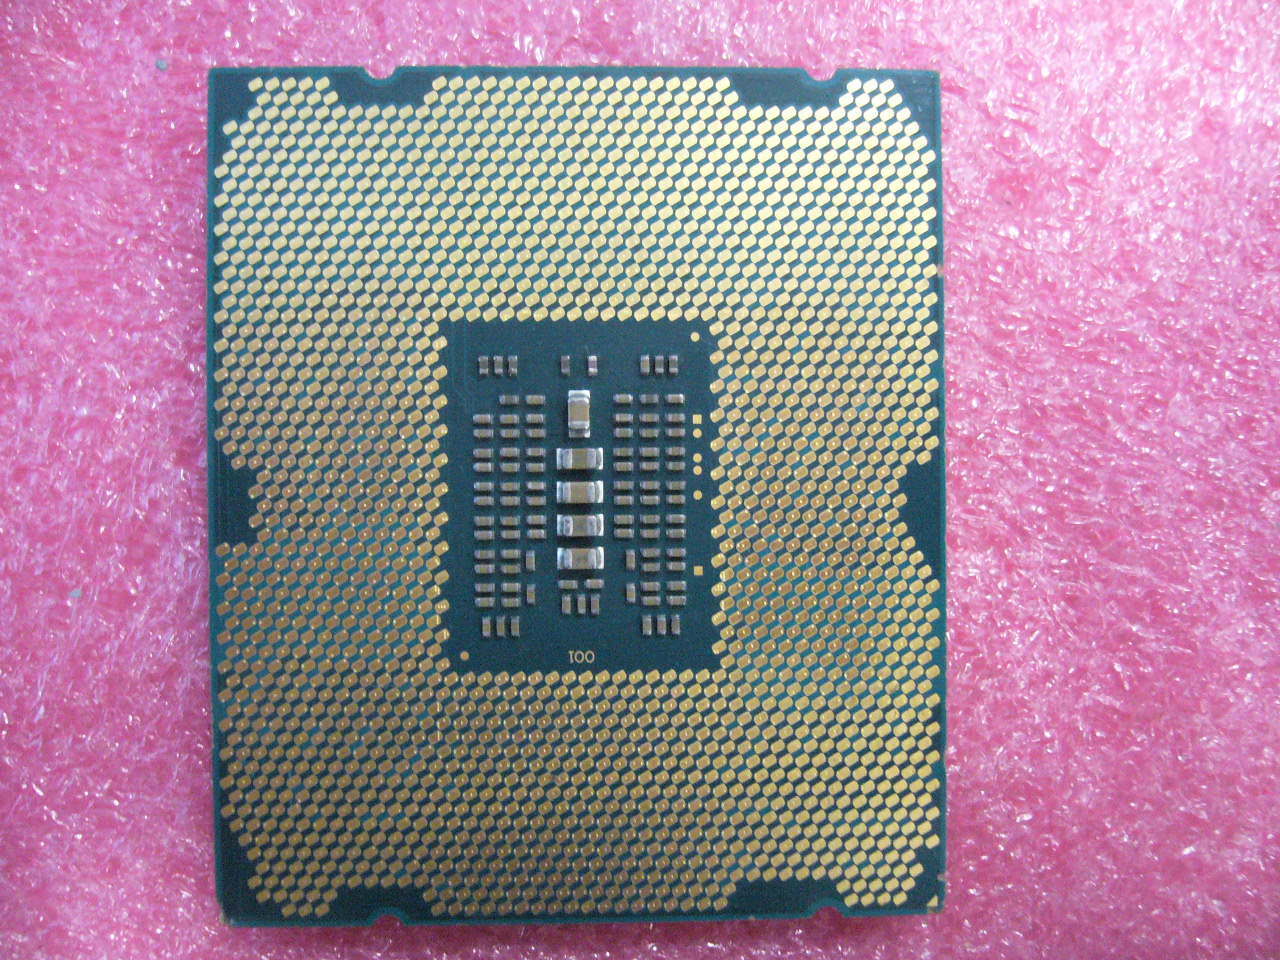 QTY 1x Intel CPU E5-2609 V2 Xeon CPU 4-Cores 2.5Ghz LGA2011 SR1AX - Click Image to Close